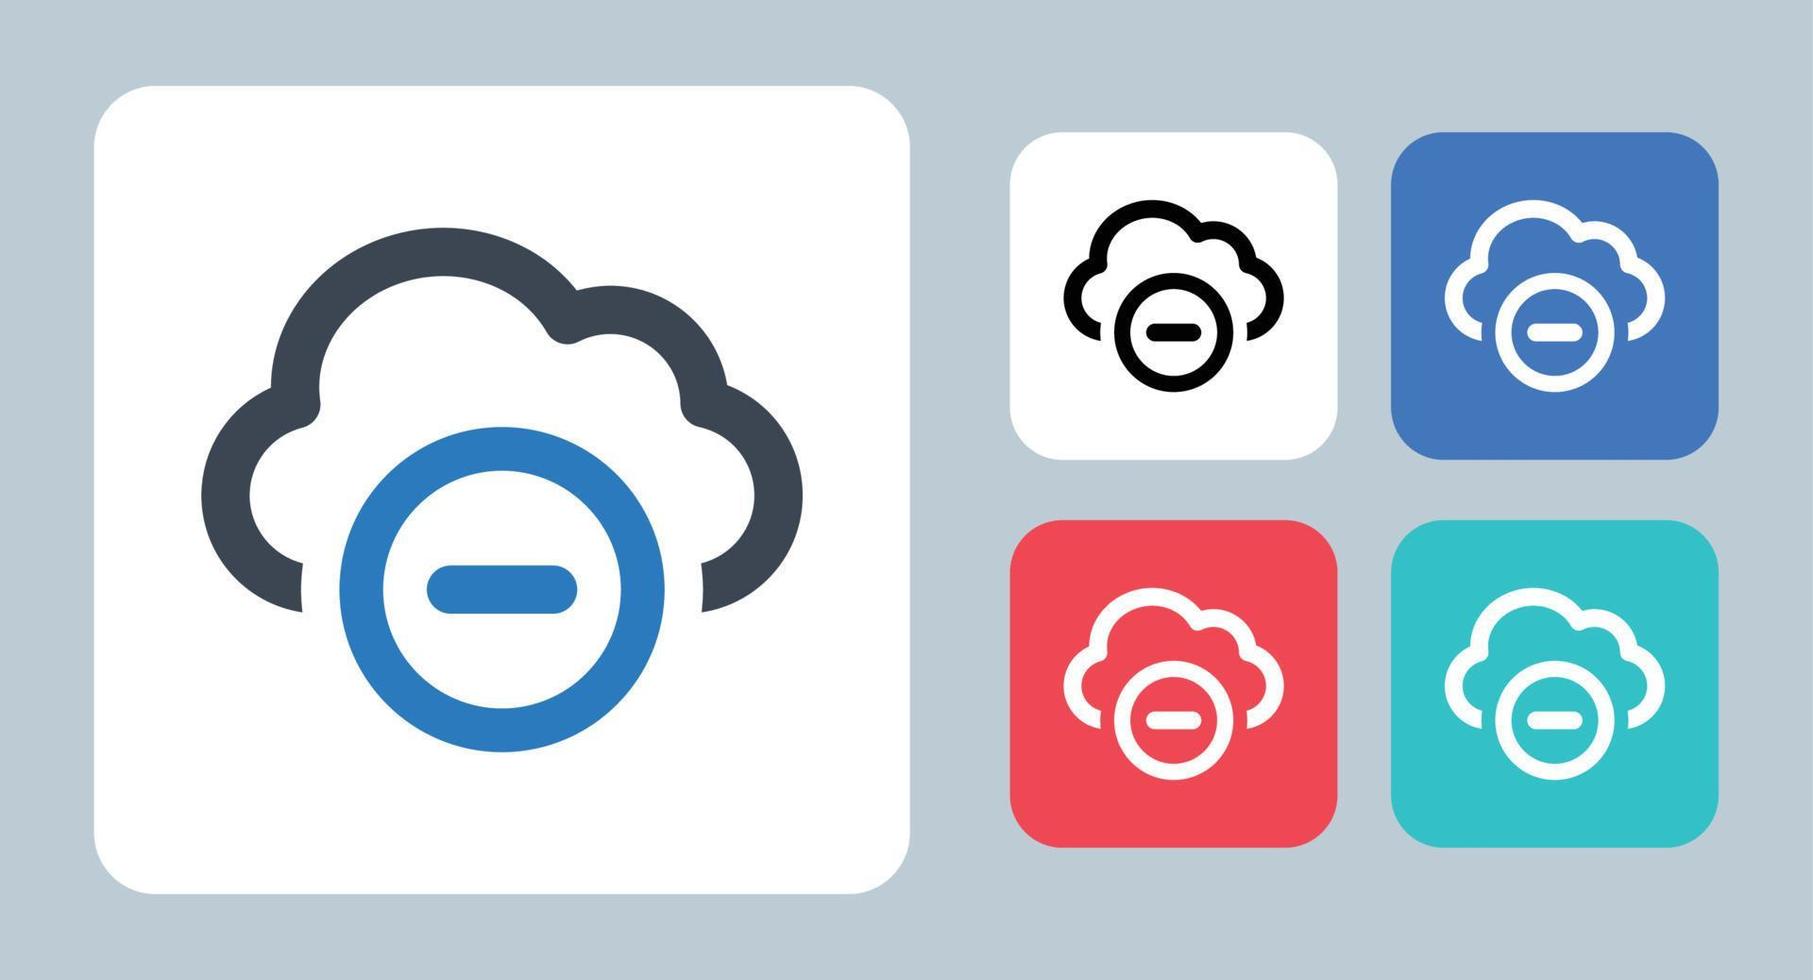 Remove Cloud icon - vector illustration . Cloud, Remove, Delete, Data, Storage, Minus, Files, server, line, outline, flat, icons .